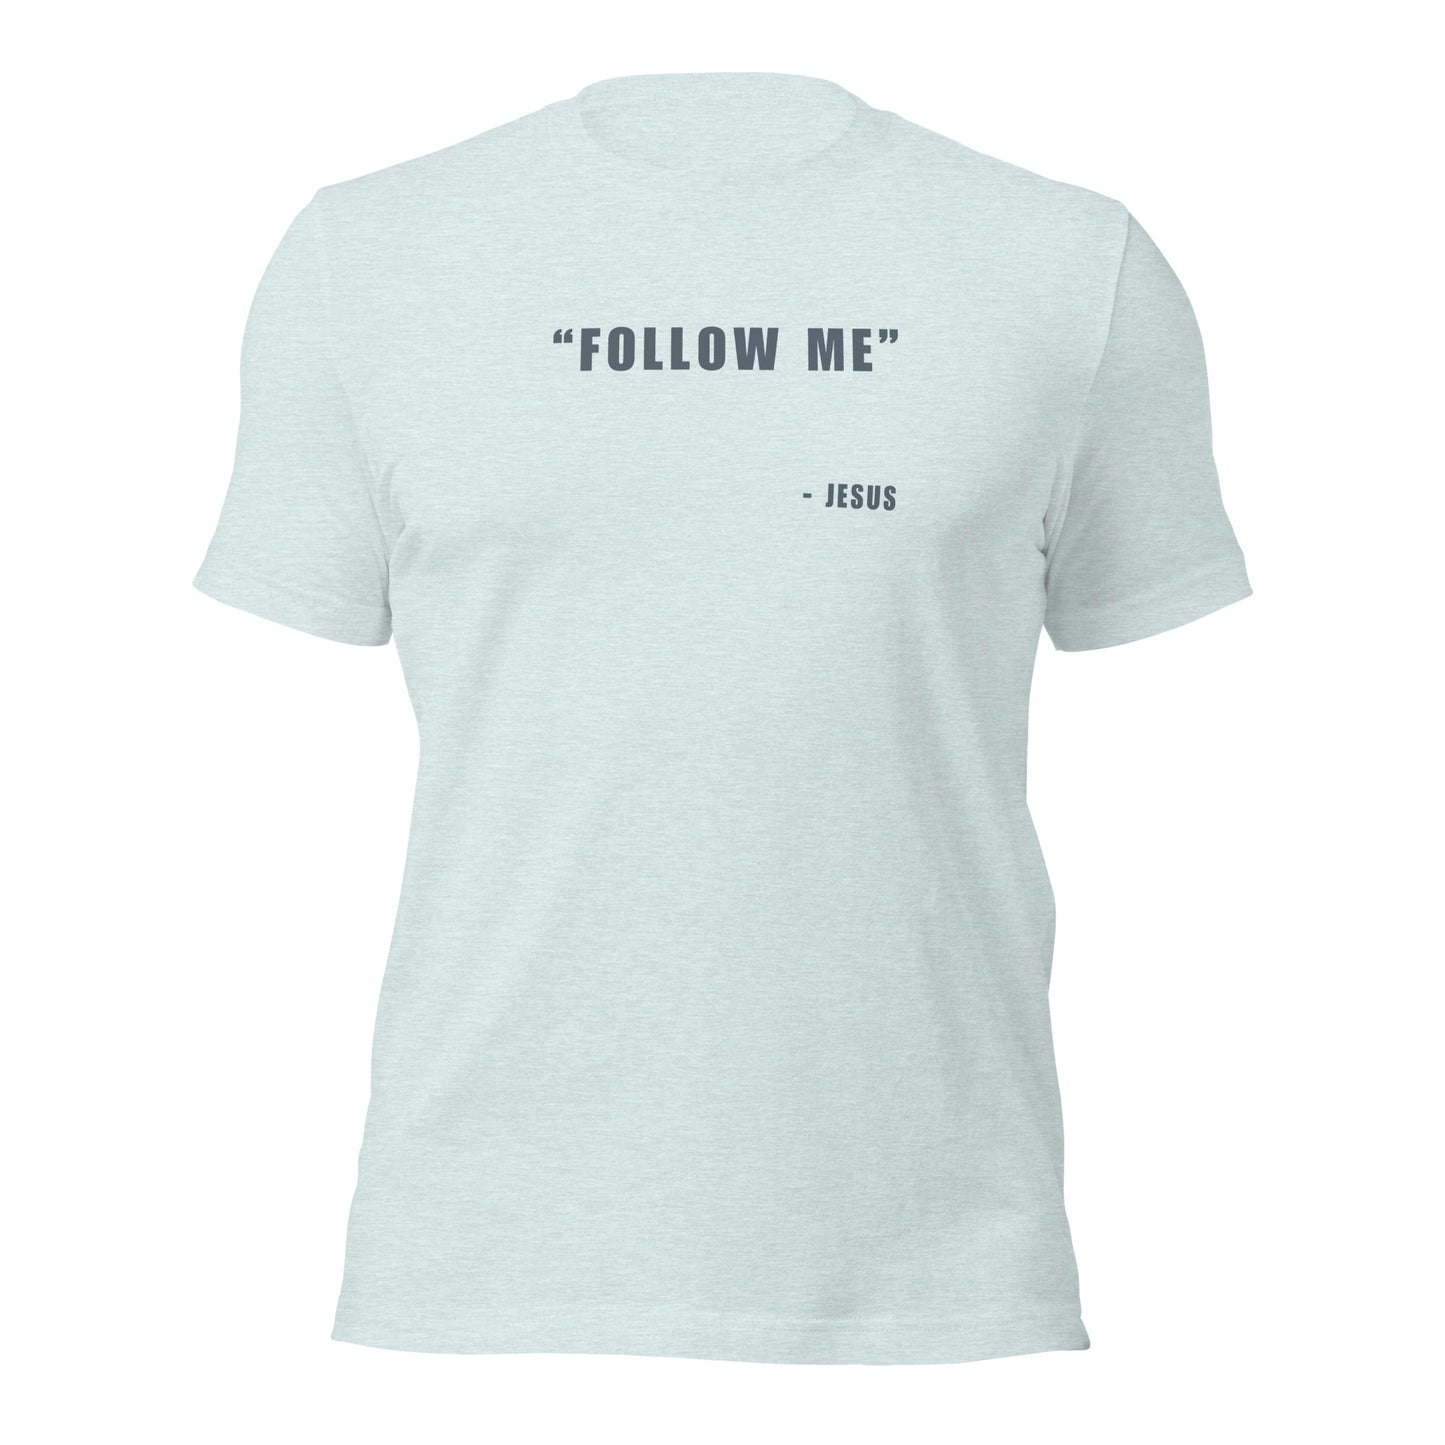 "Follow Me" Unisex T-shirt